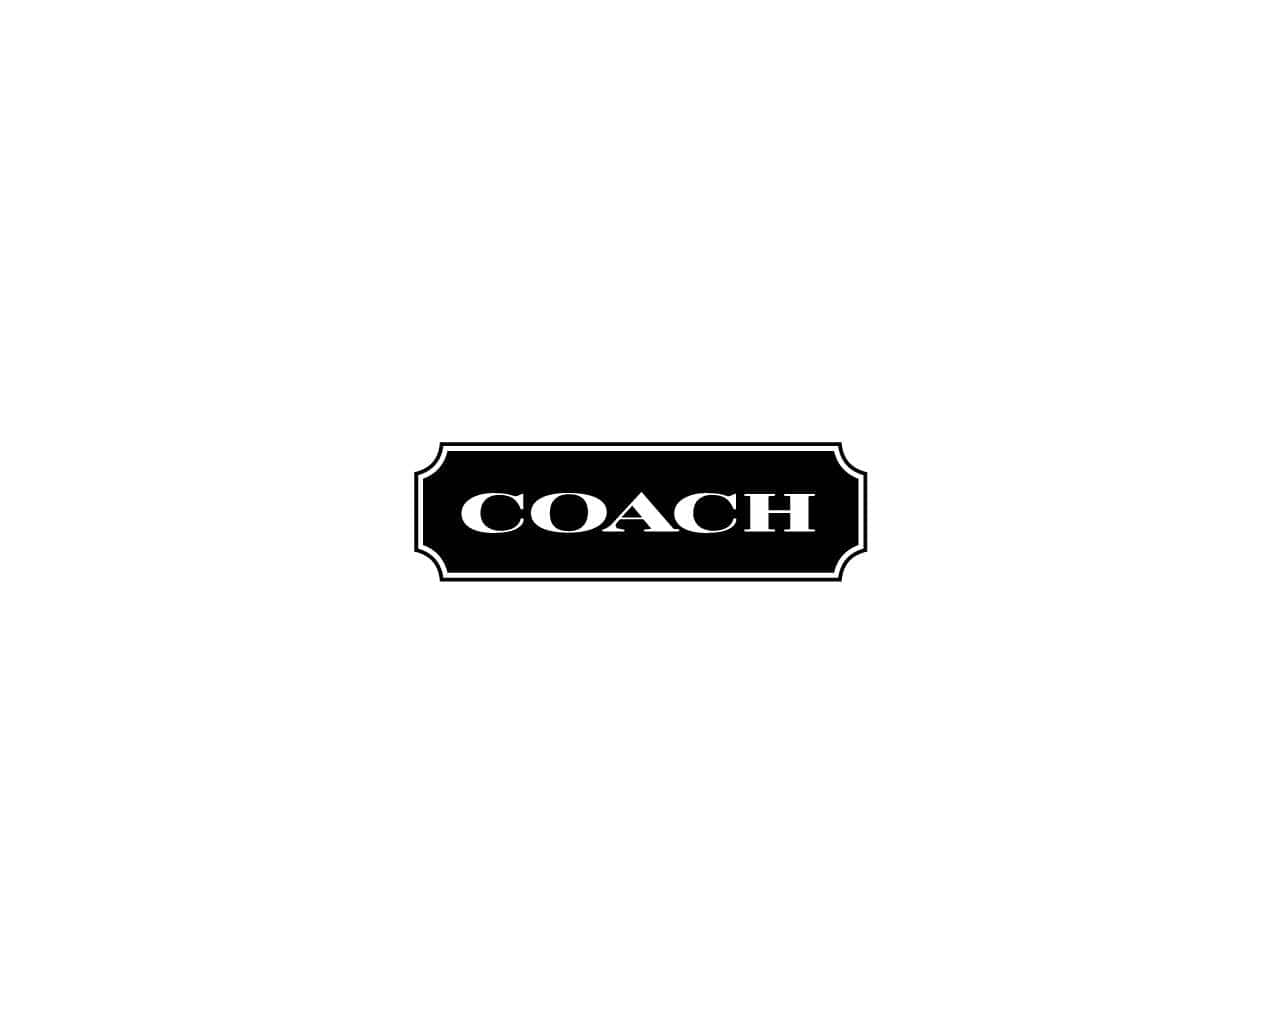 Coach Logo On A White Background